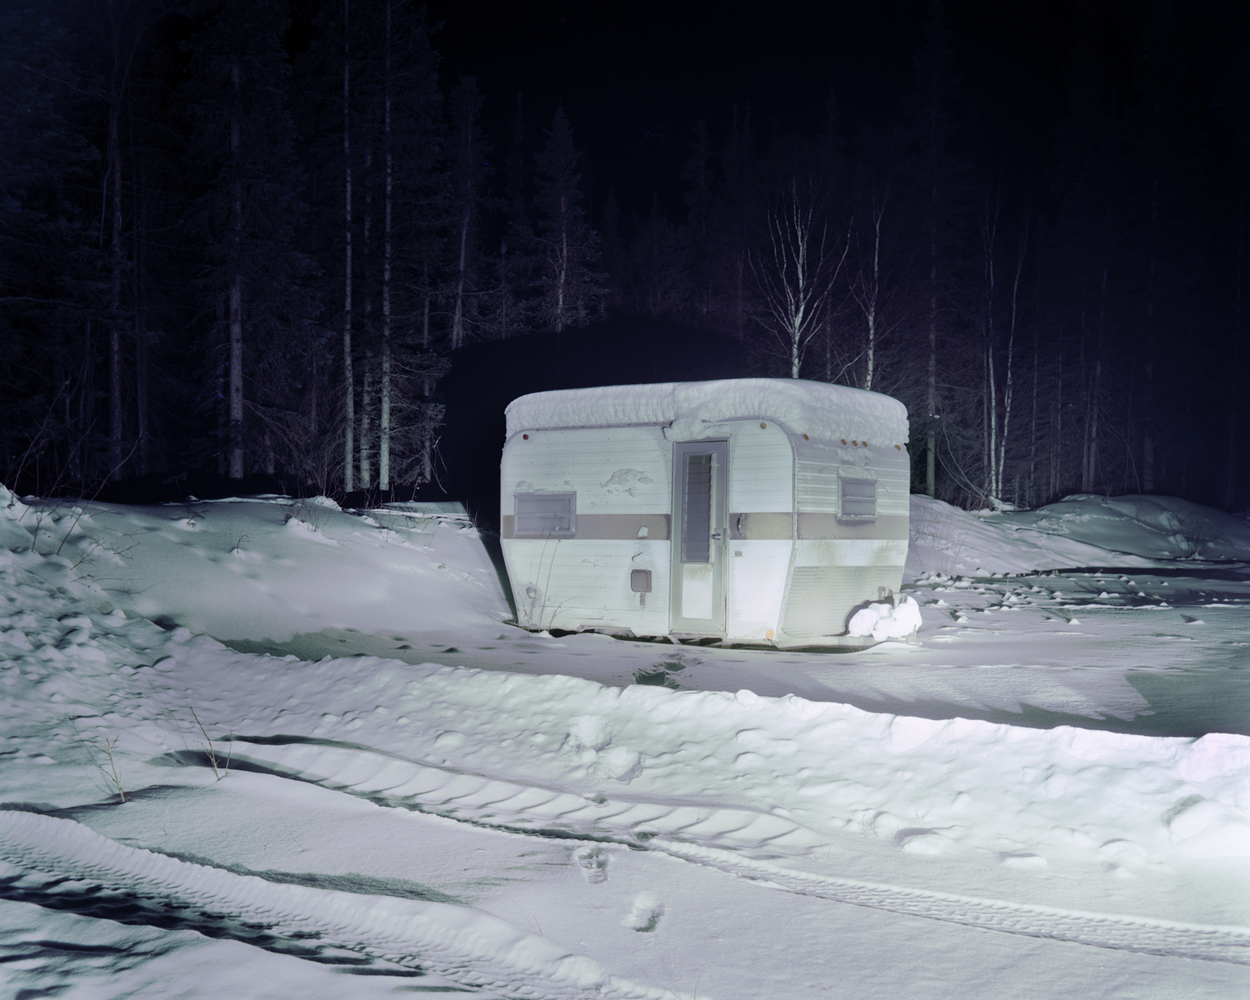 Image: Camper in Snow, 2010.